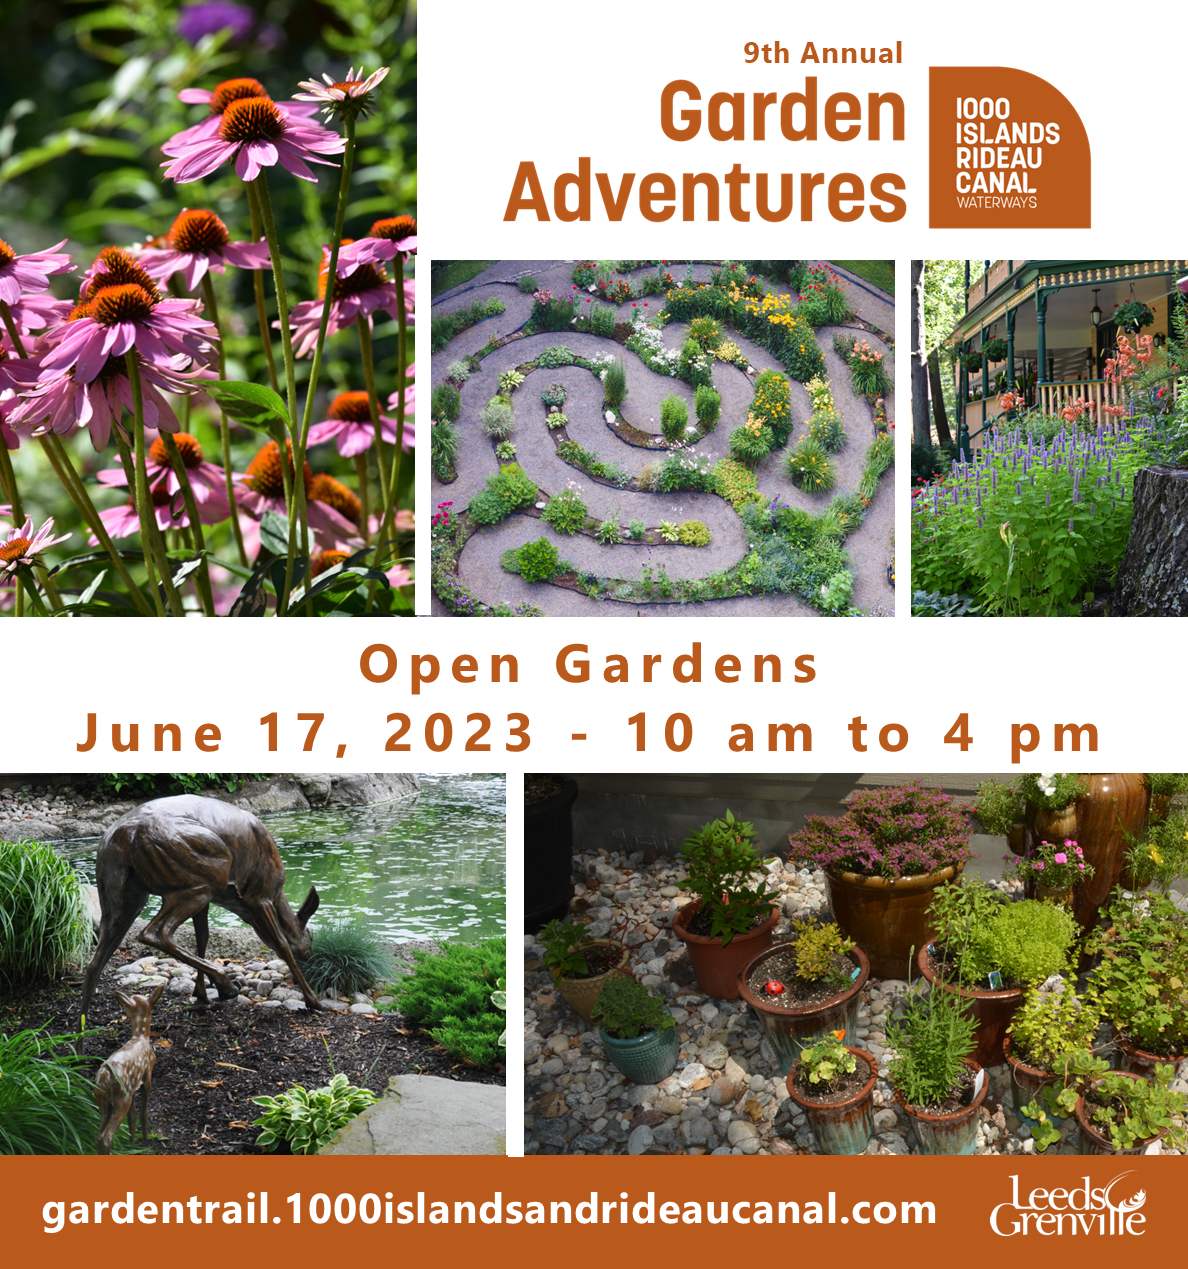 1000 Islands Rideau Canal Garden Adventures Open Gardens @ Various, see website